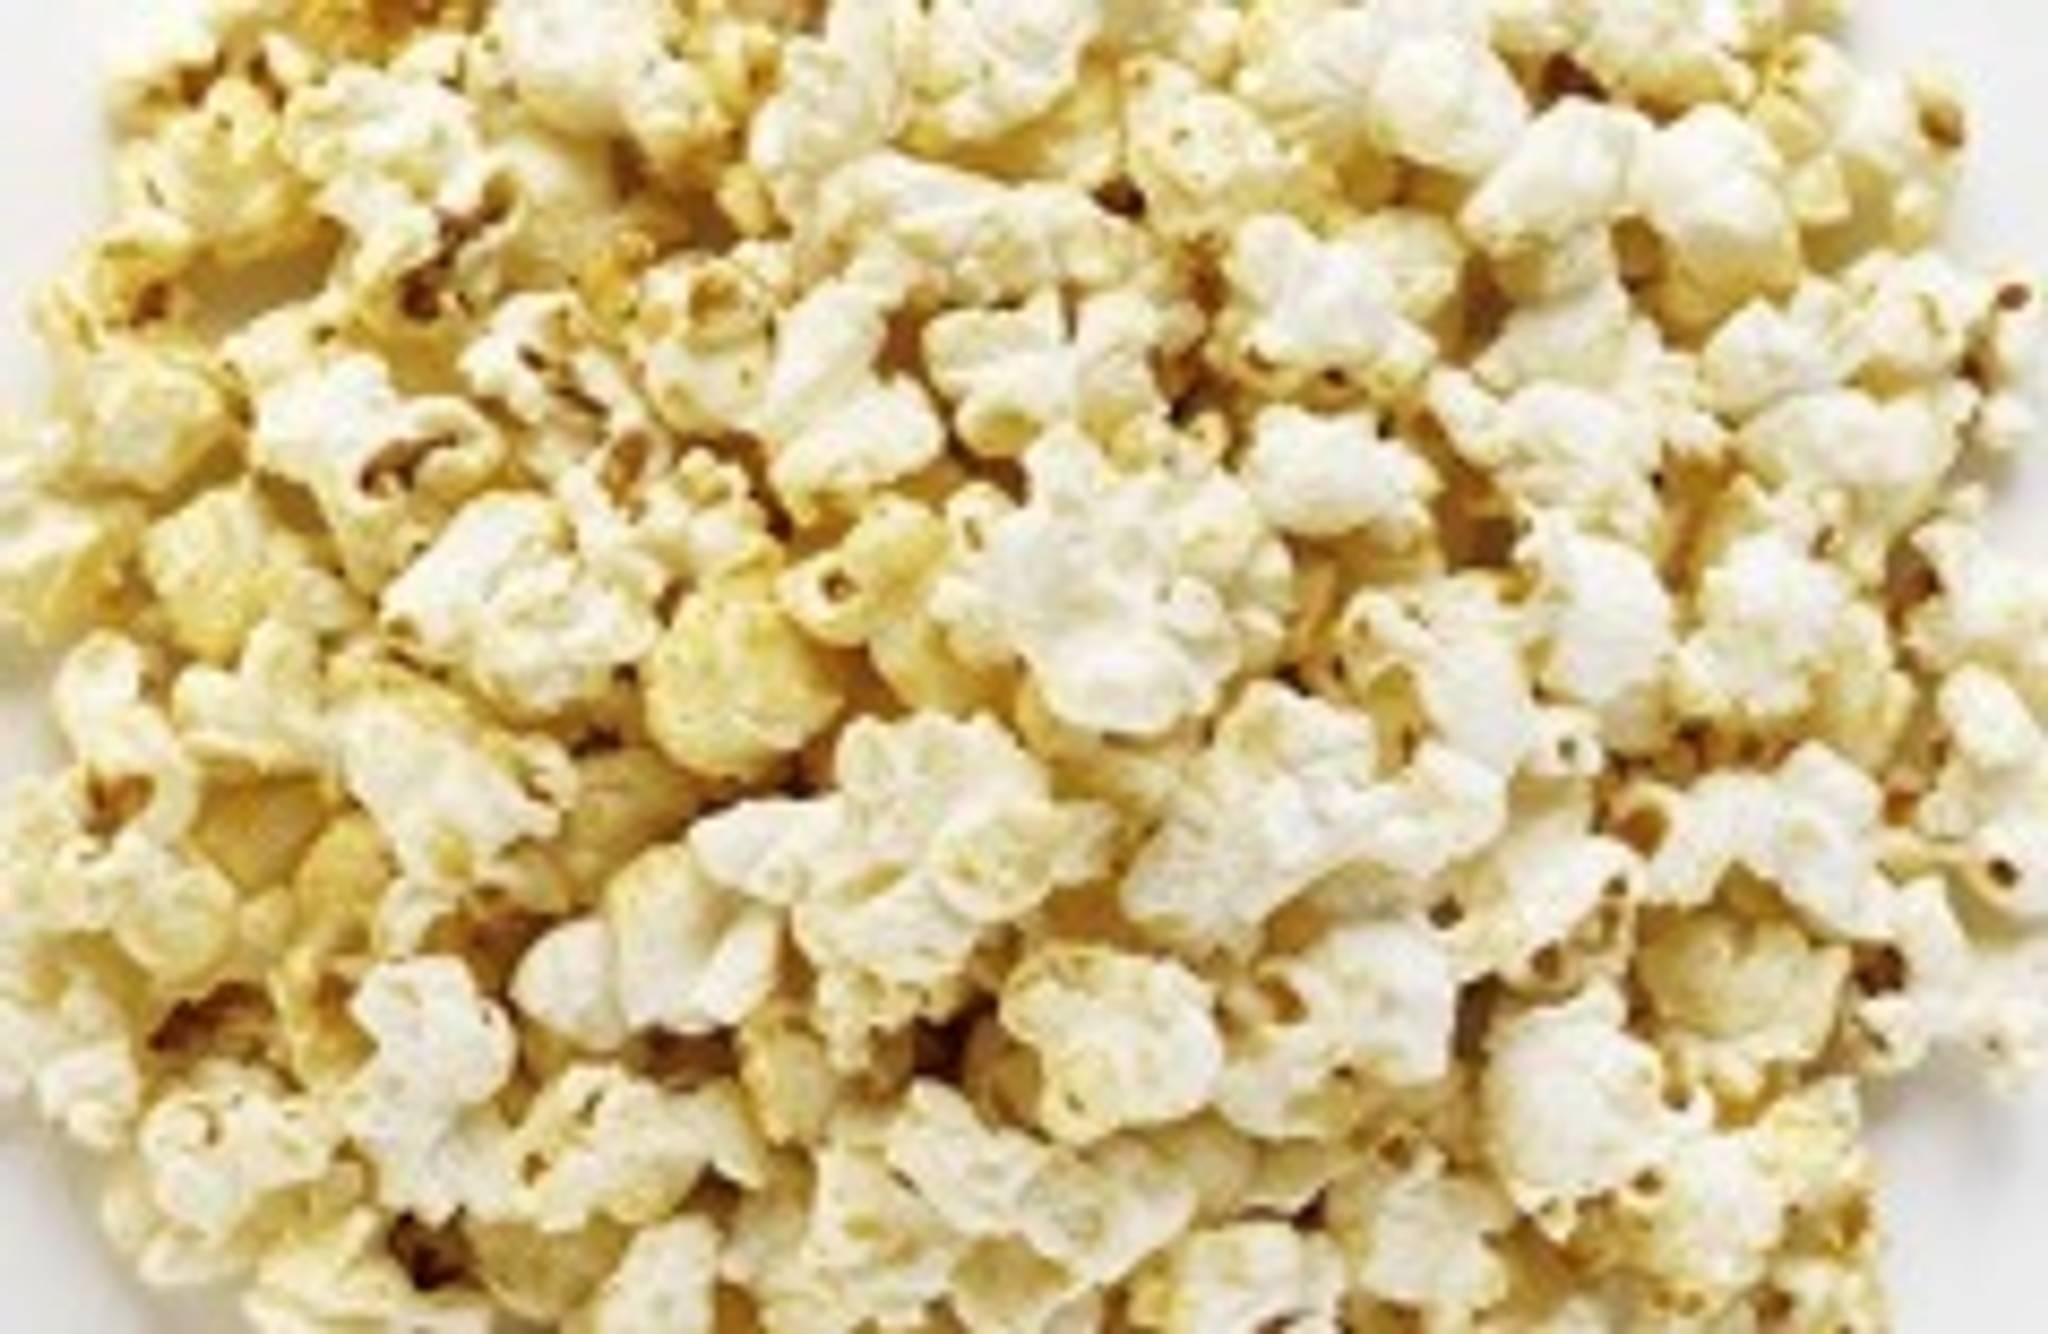 Popcorn causes advert immunity